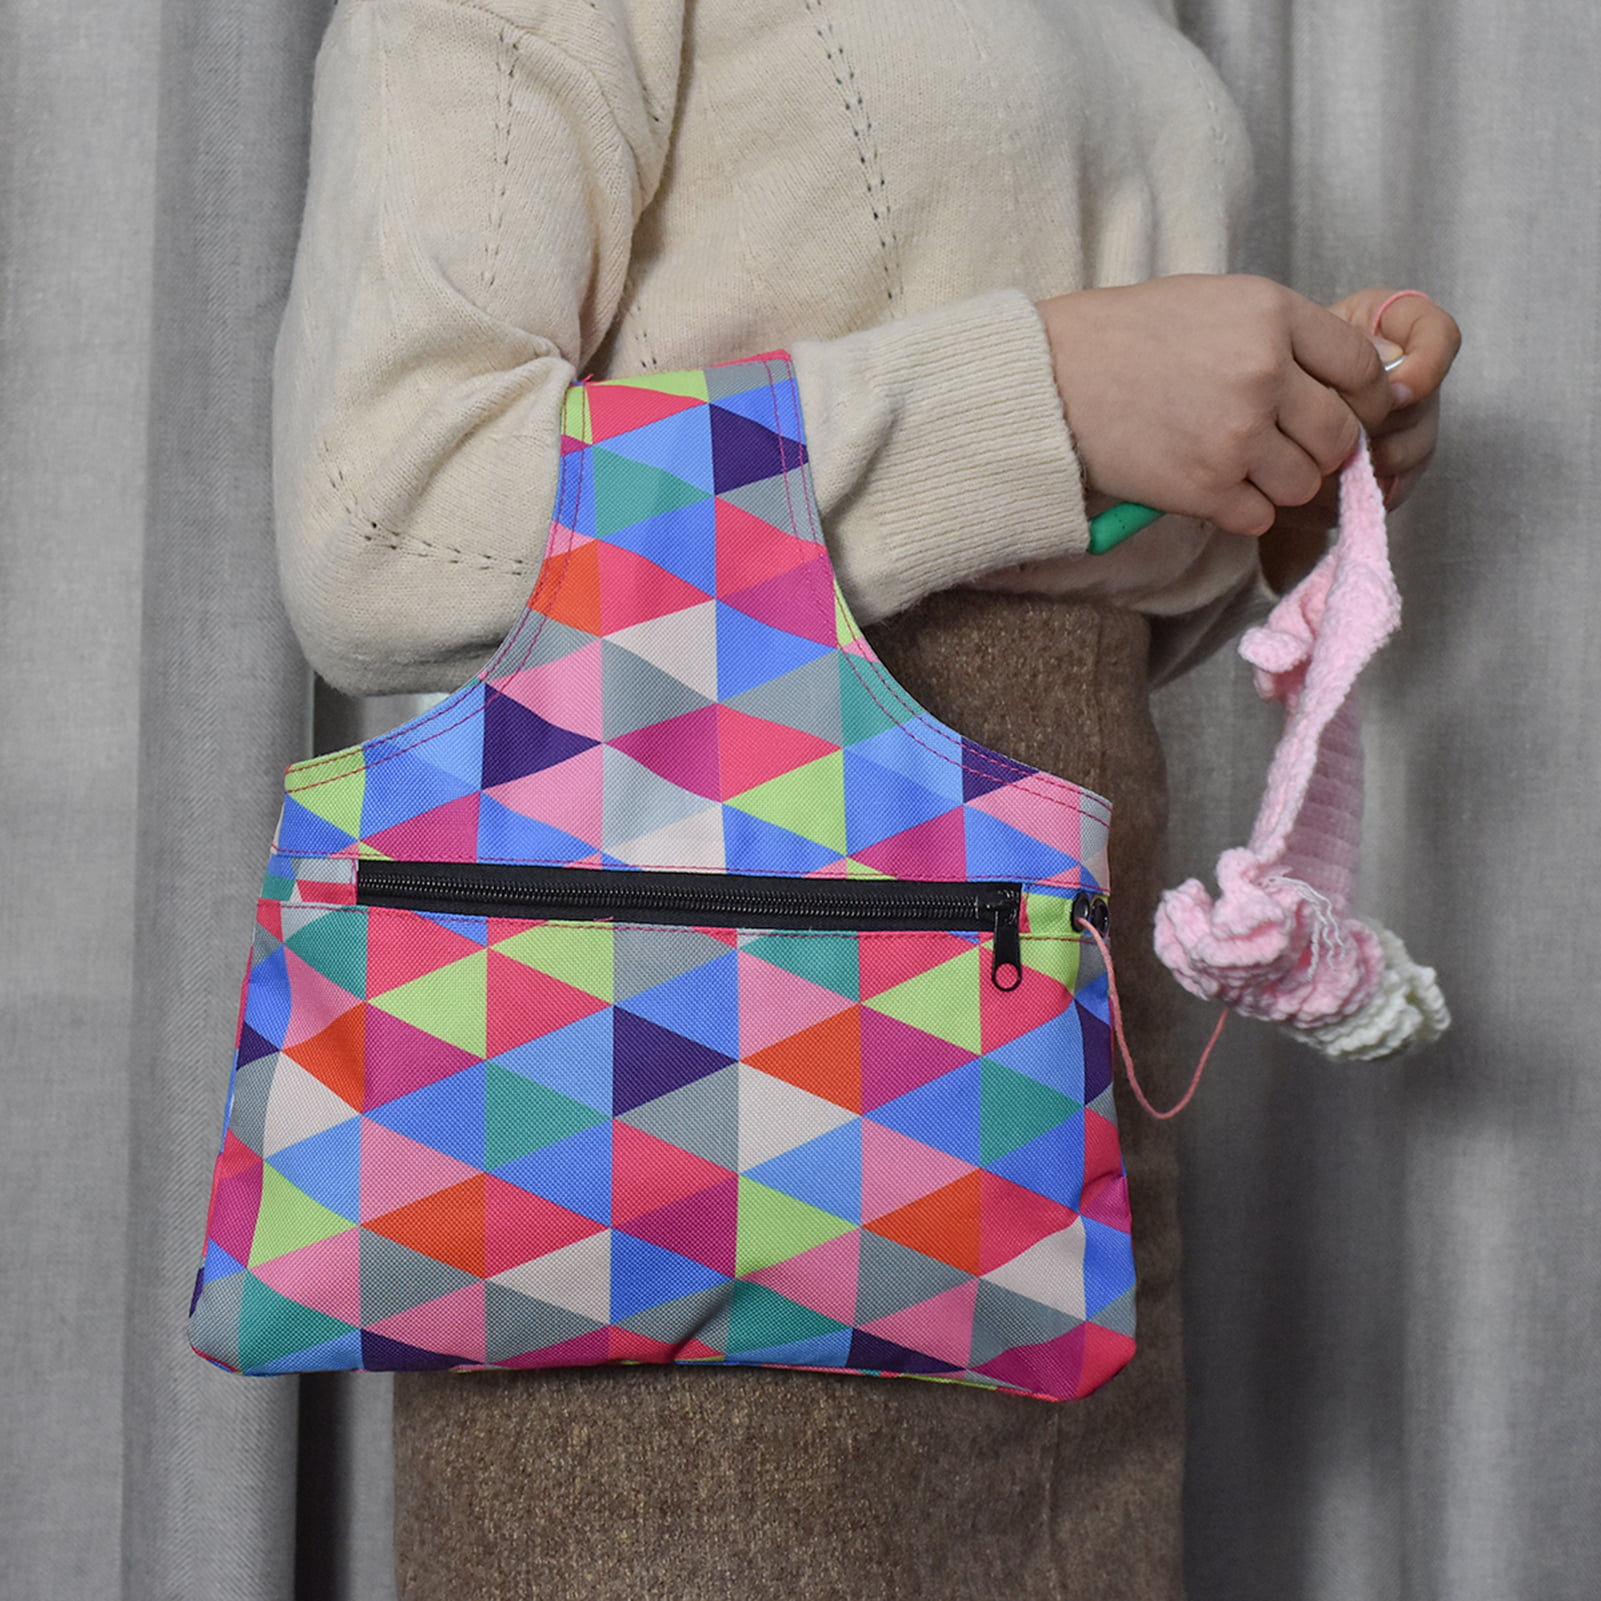 New Storage Bag Organizer Knitting Holder Crochet Tote Handbag Wrist Sack Bag 